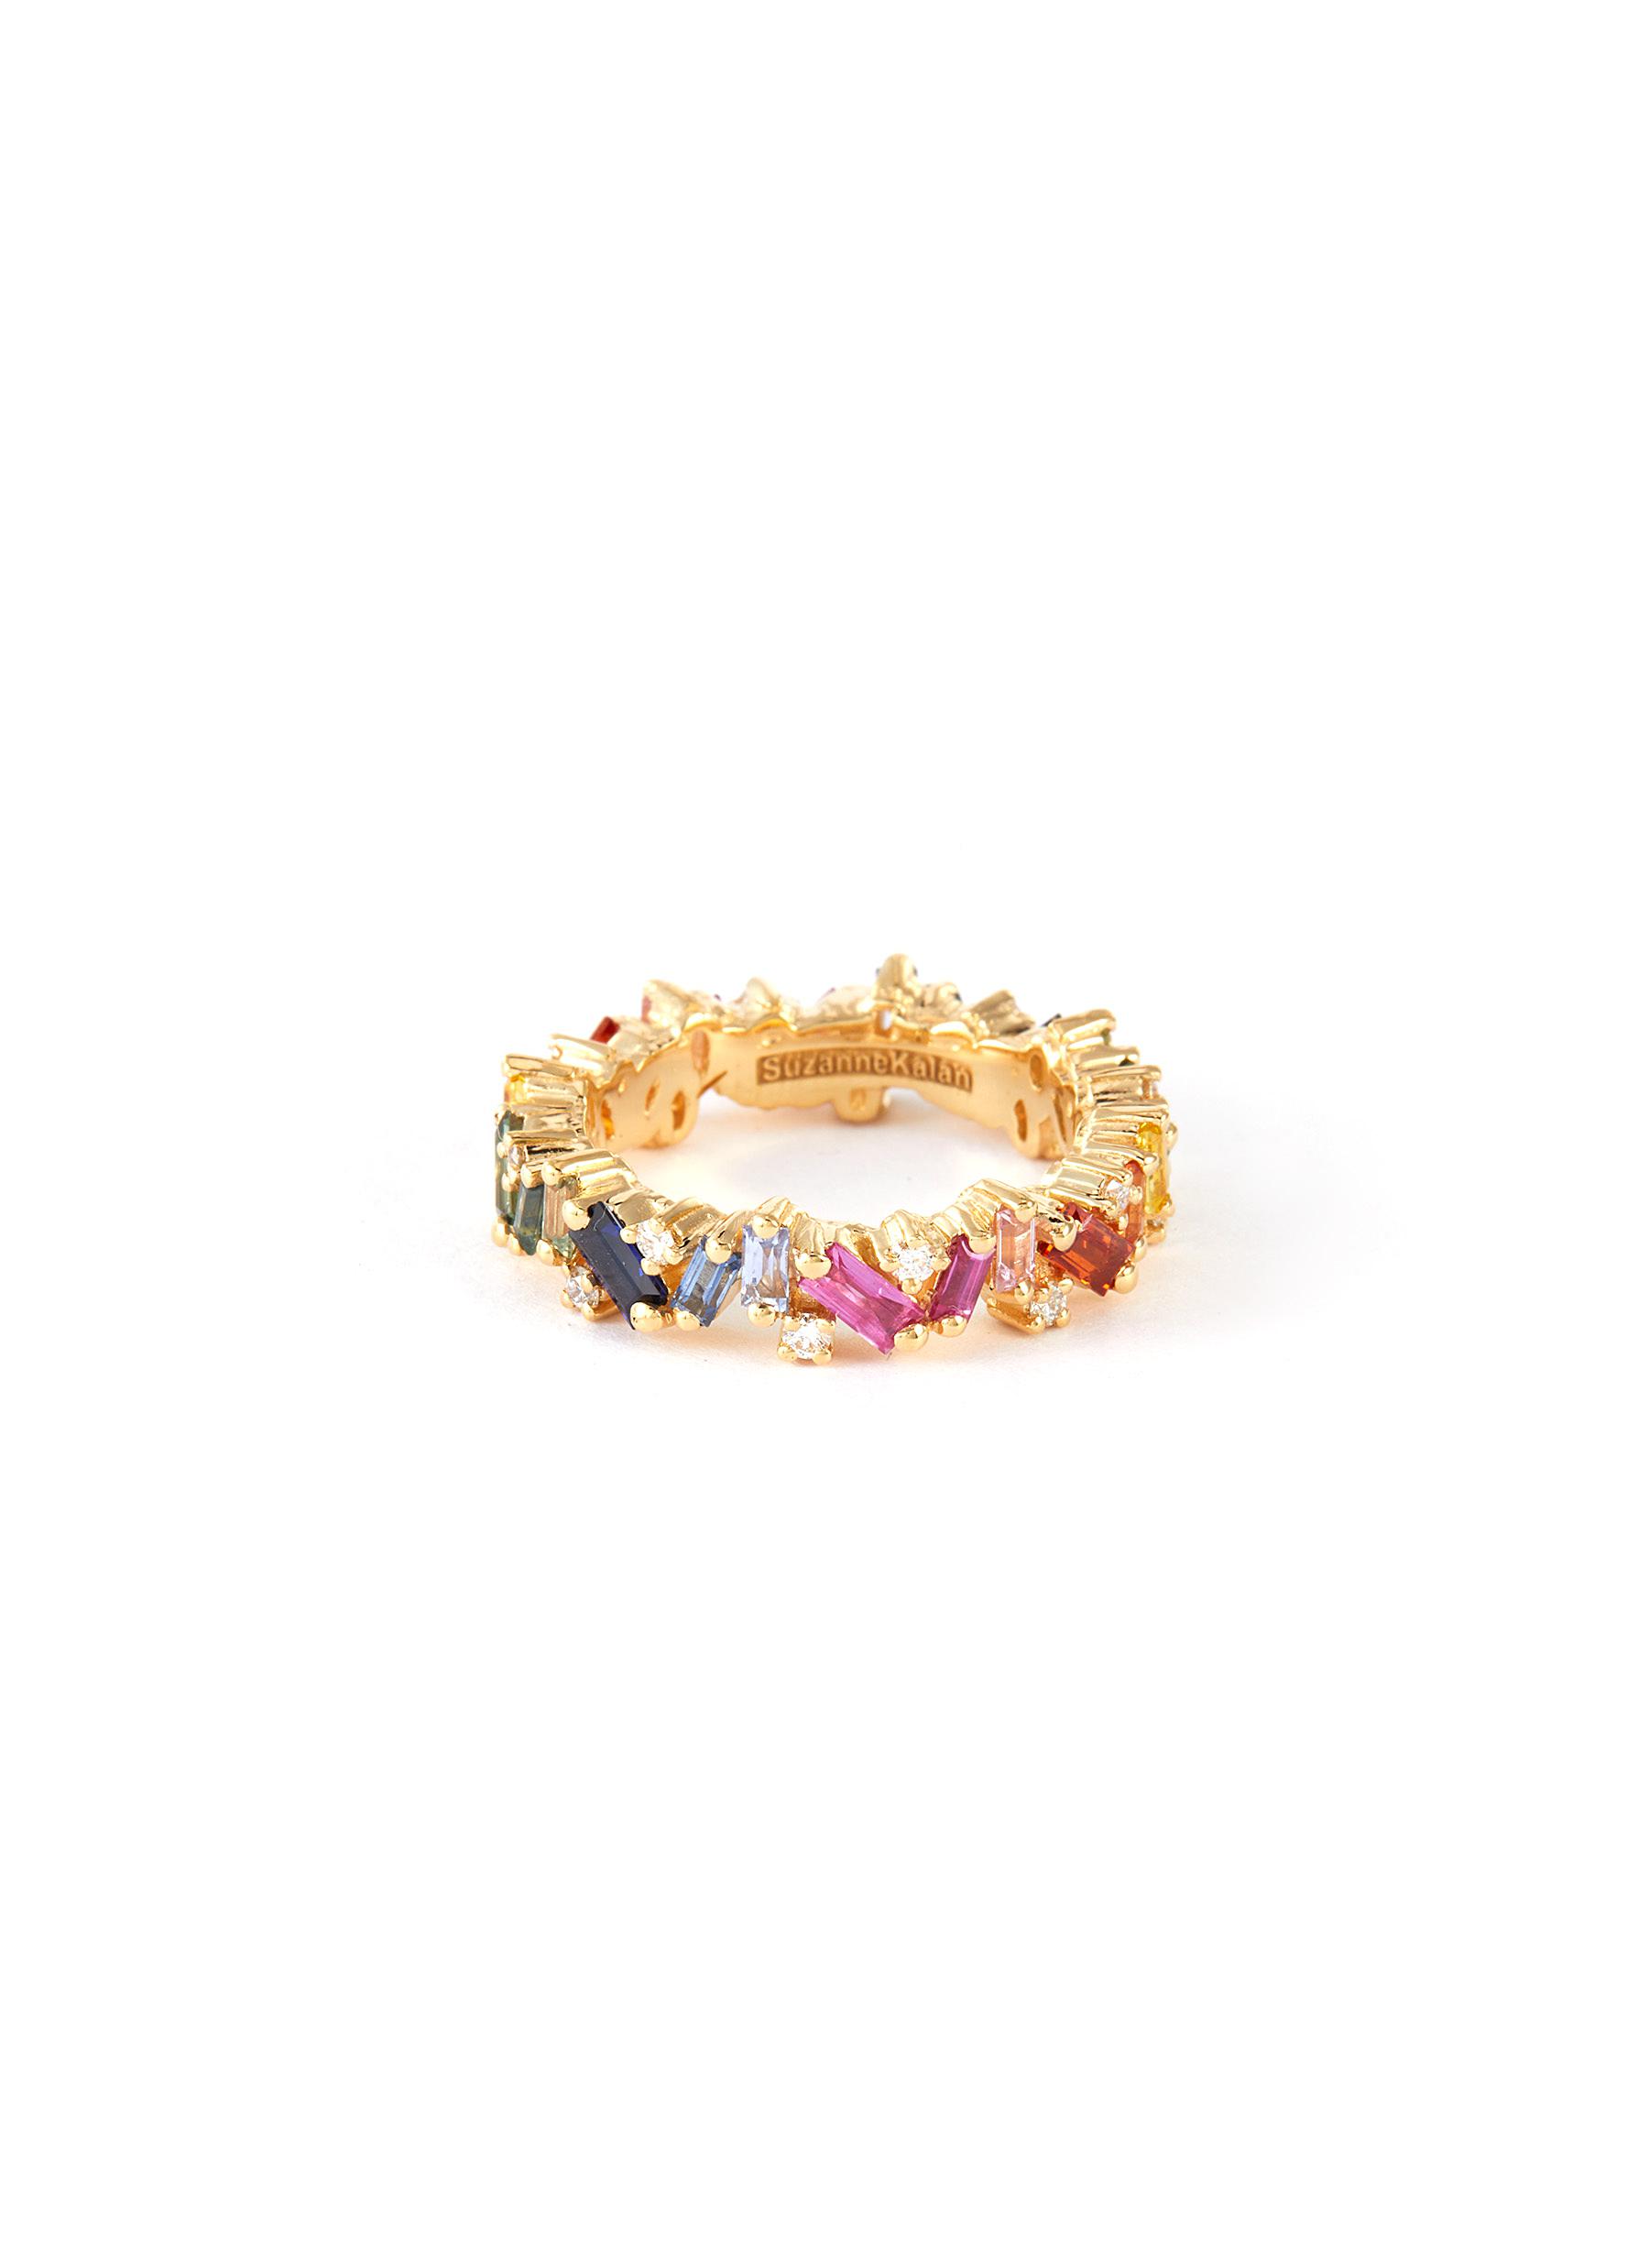 ’Frenzy’ diamond sapphire 18k gold eternity ring